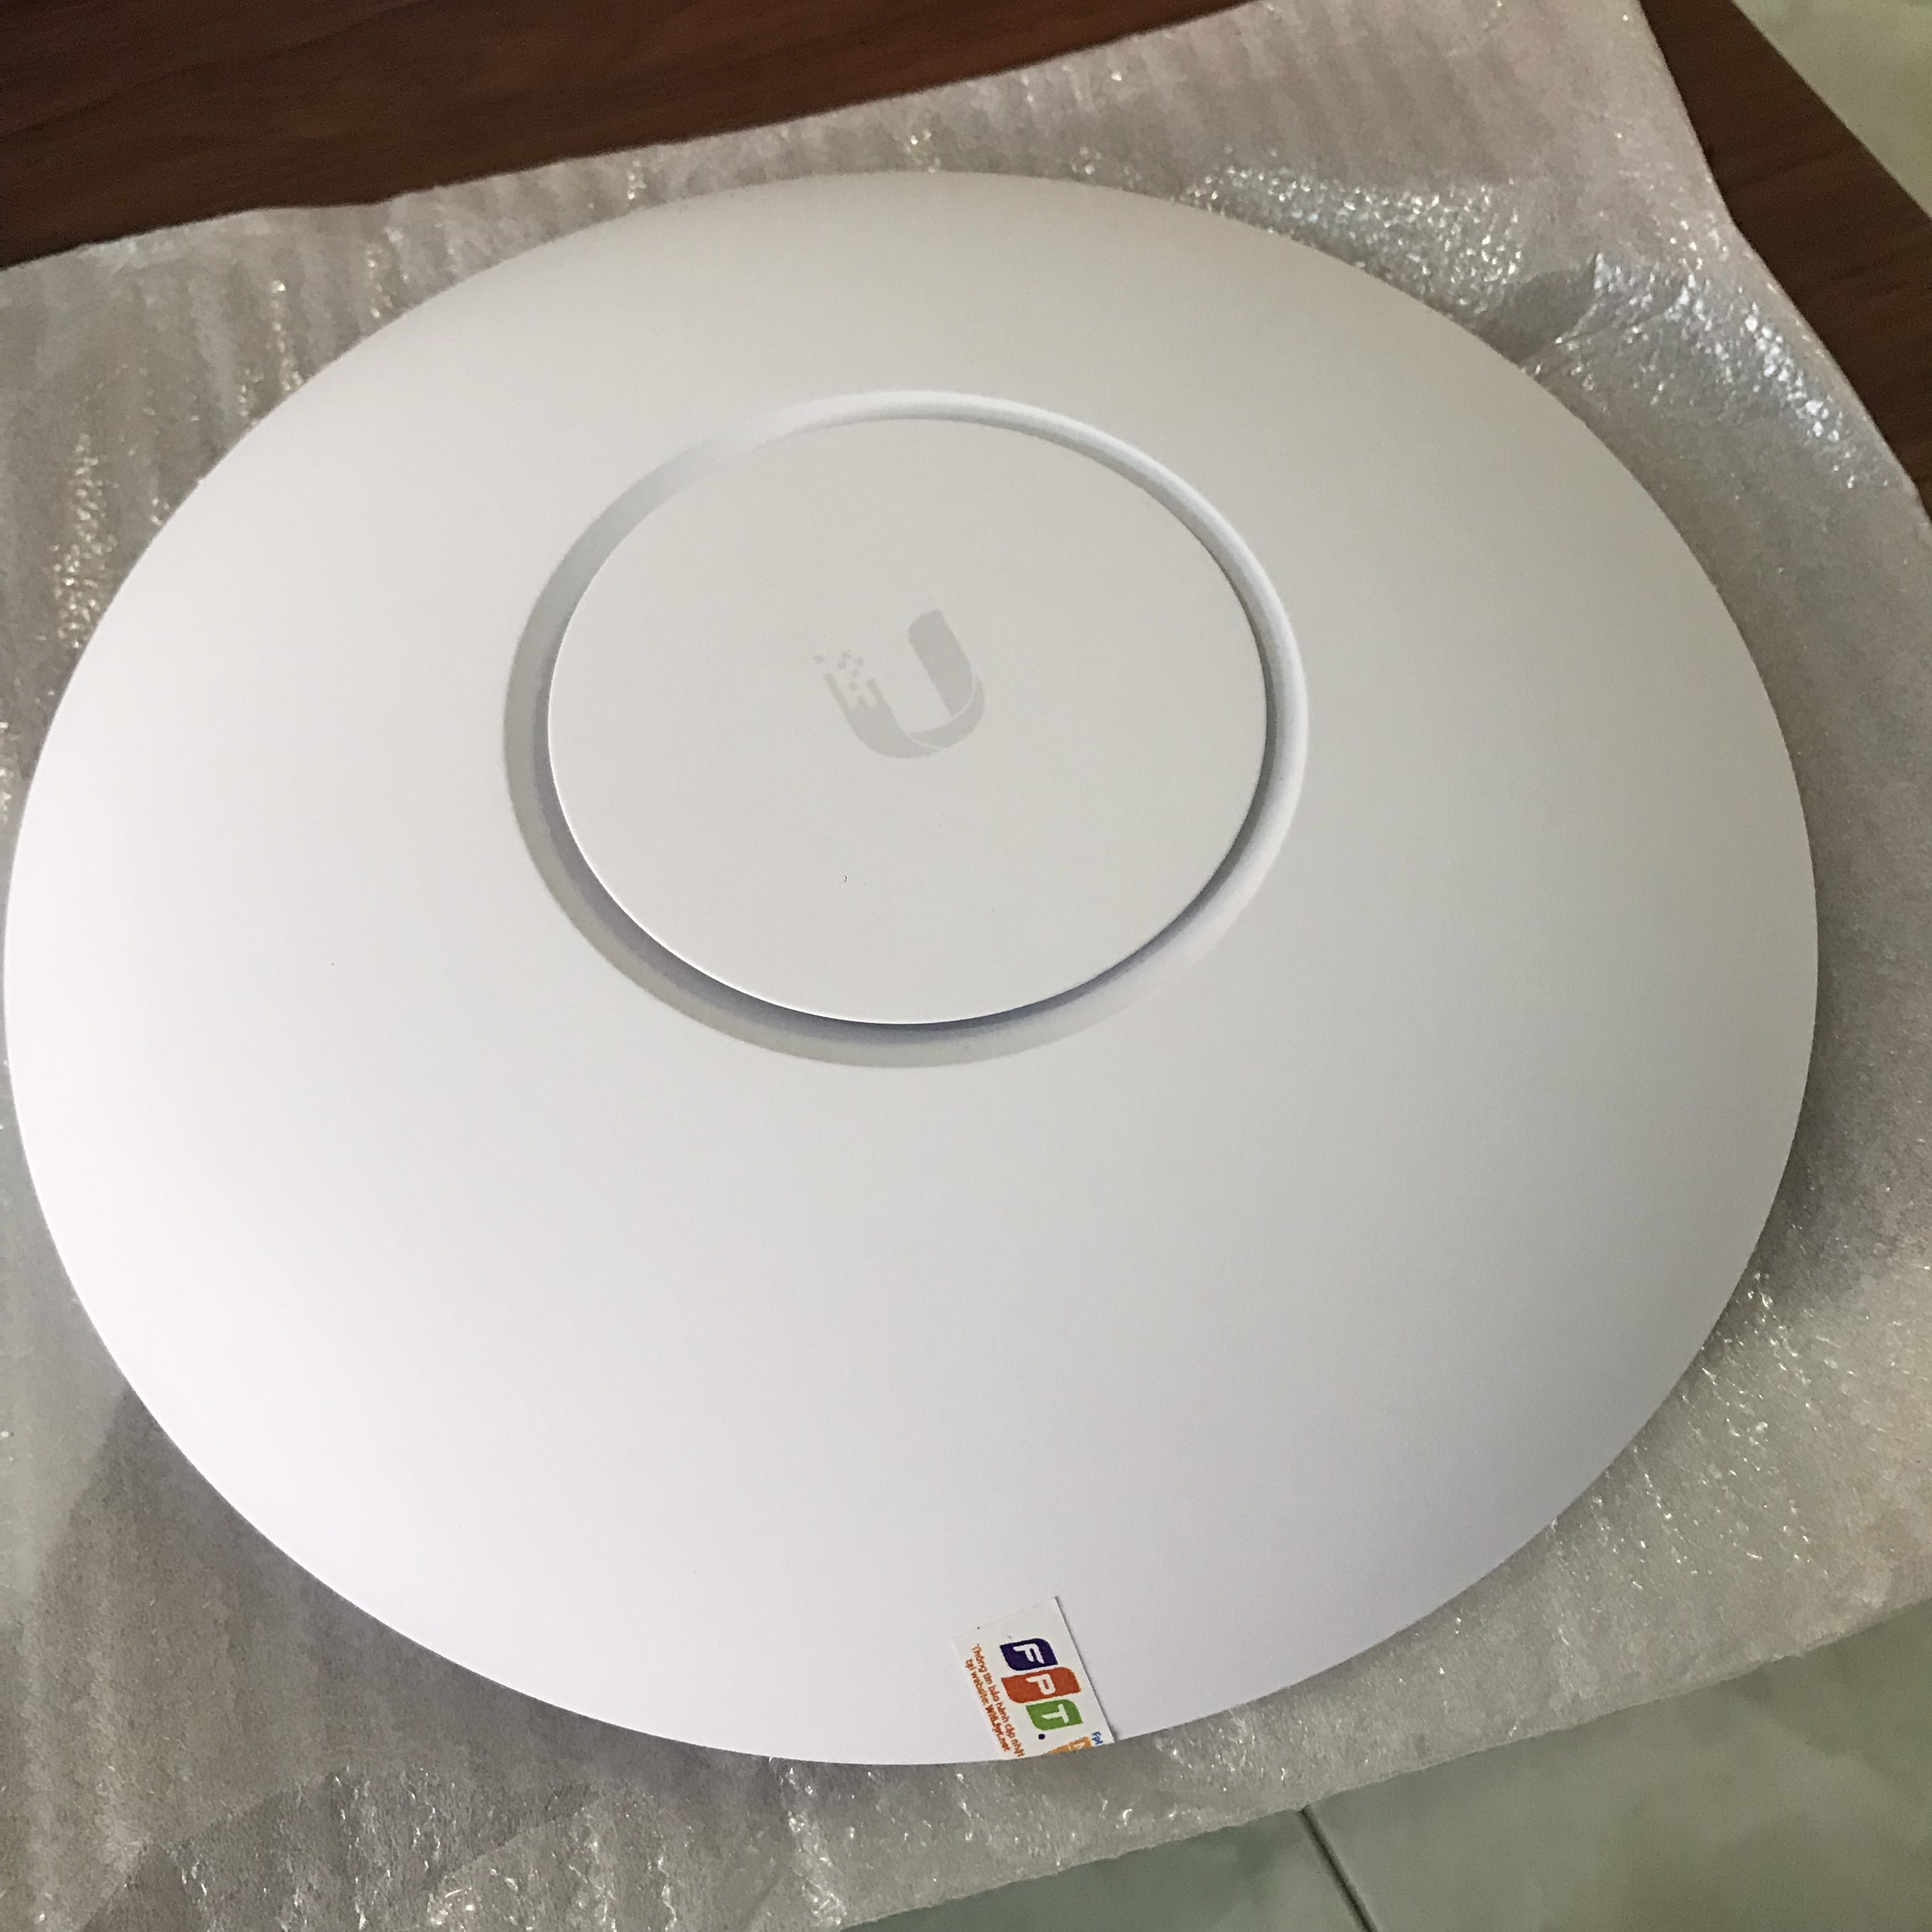 Wifi chuyên dụng chịu tải cao Ubiquiti UniFi UAP-AC-PRO